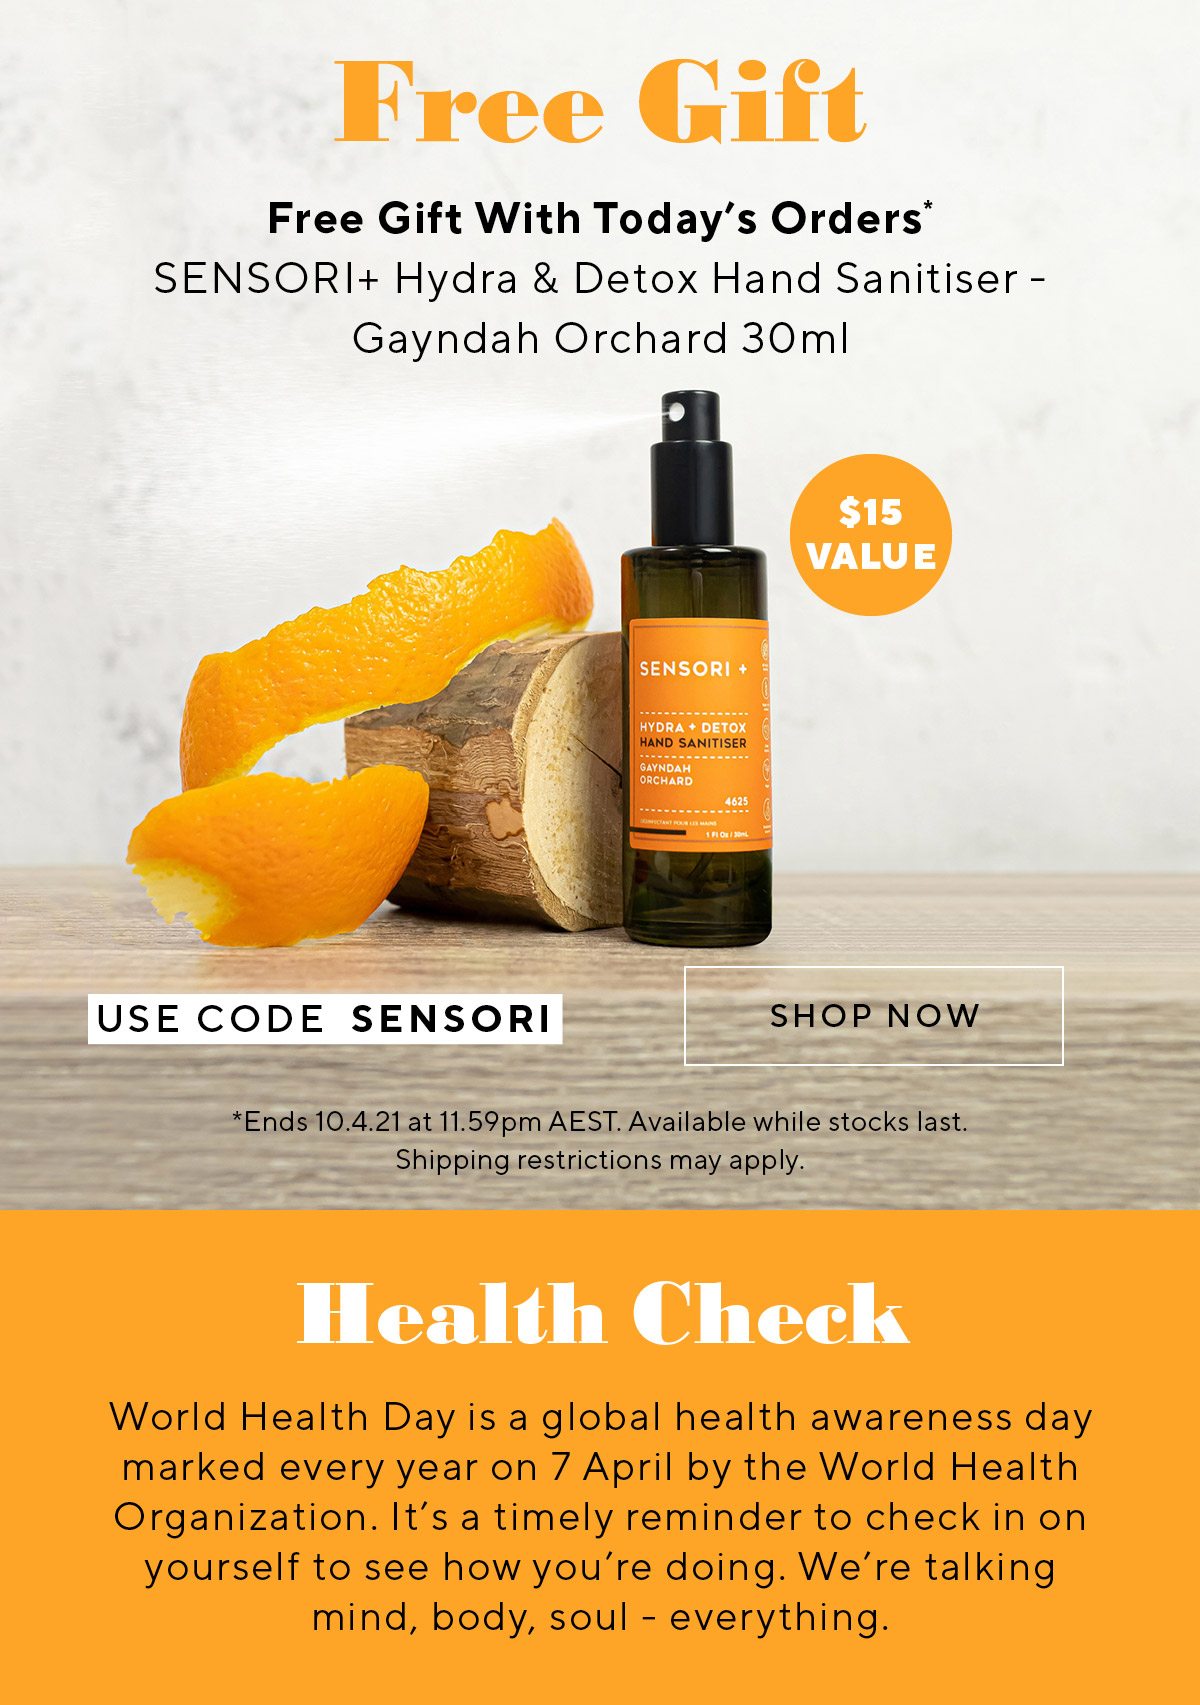 Free SENSORI+ Hydra & Detox Hand Sanitiser with today's orders